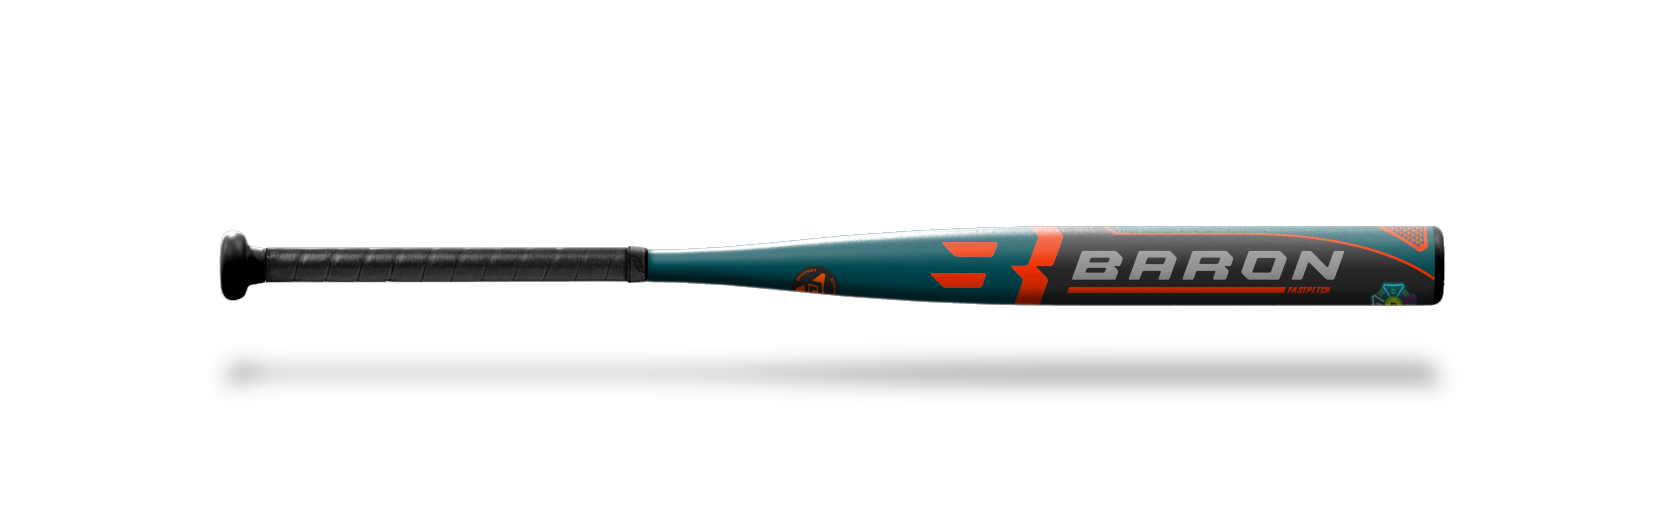 Fastpitch bat graphics softball design